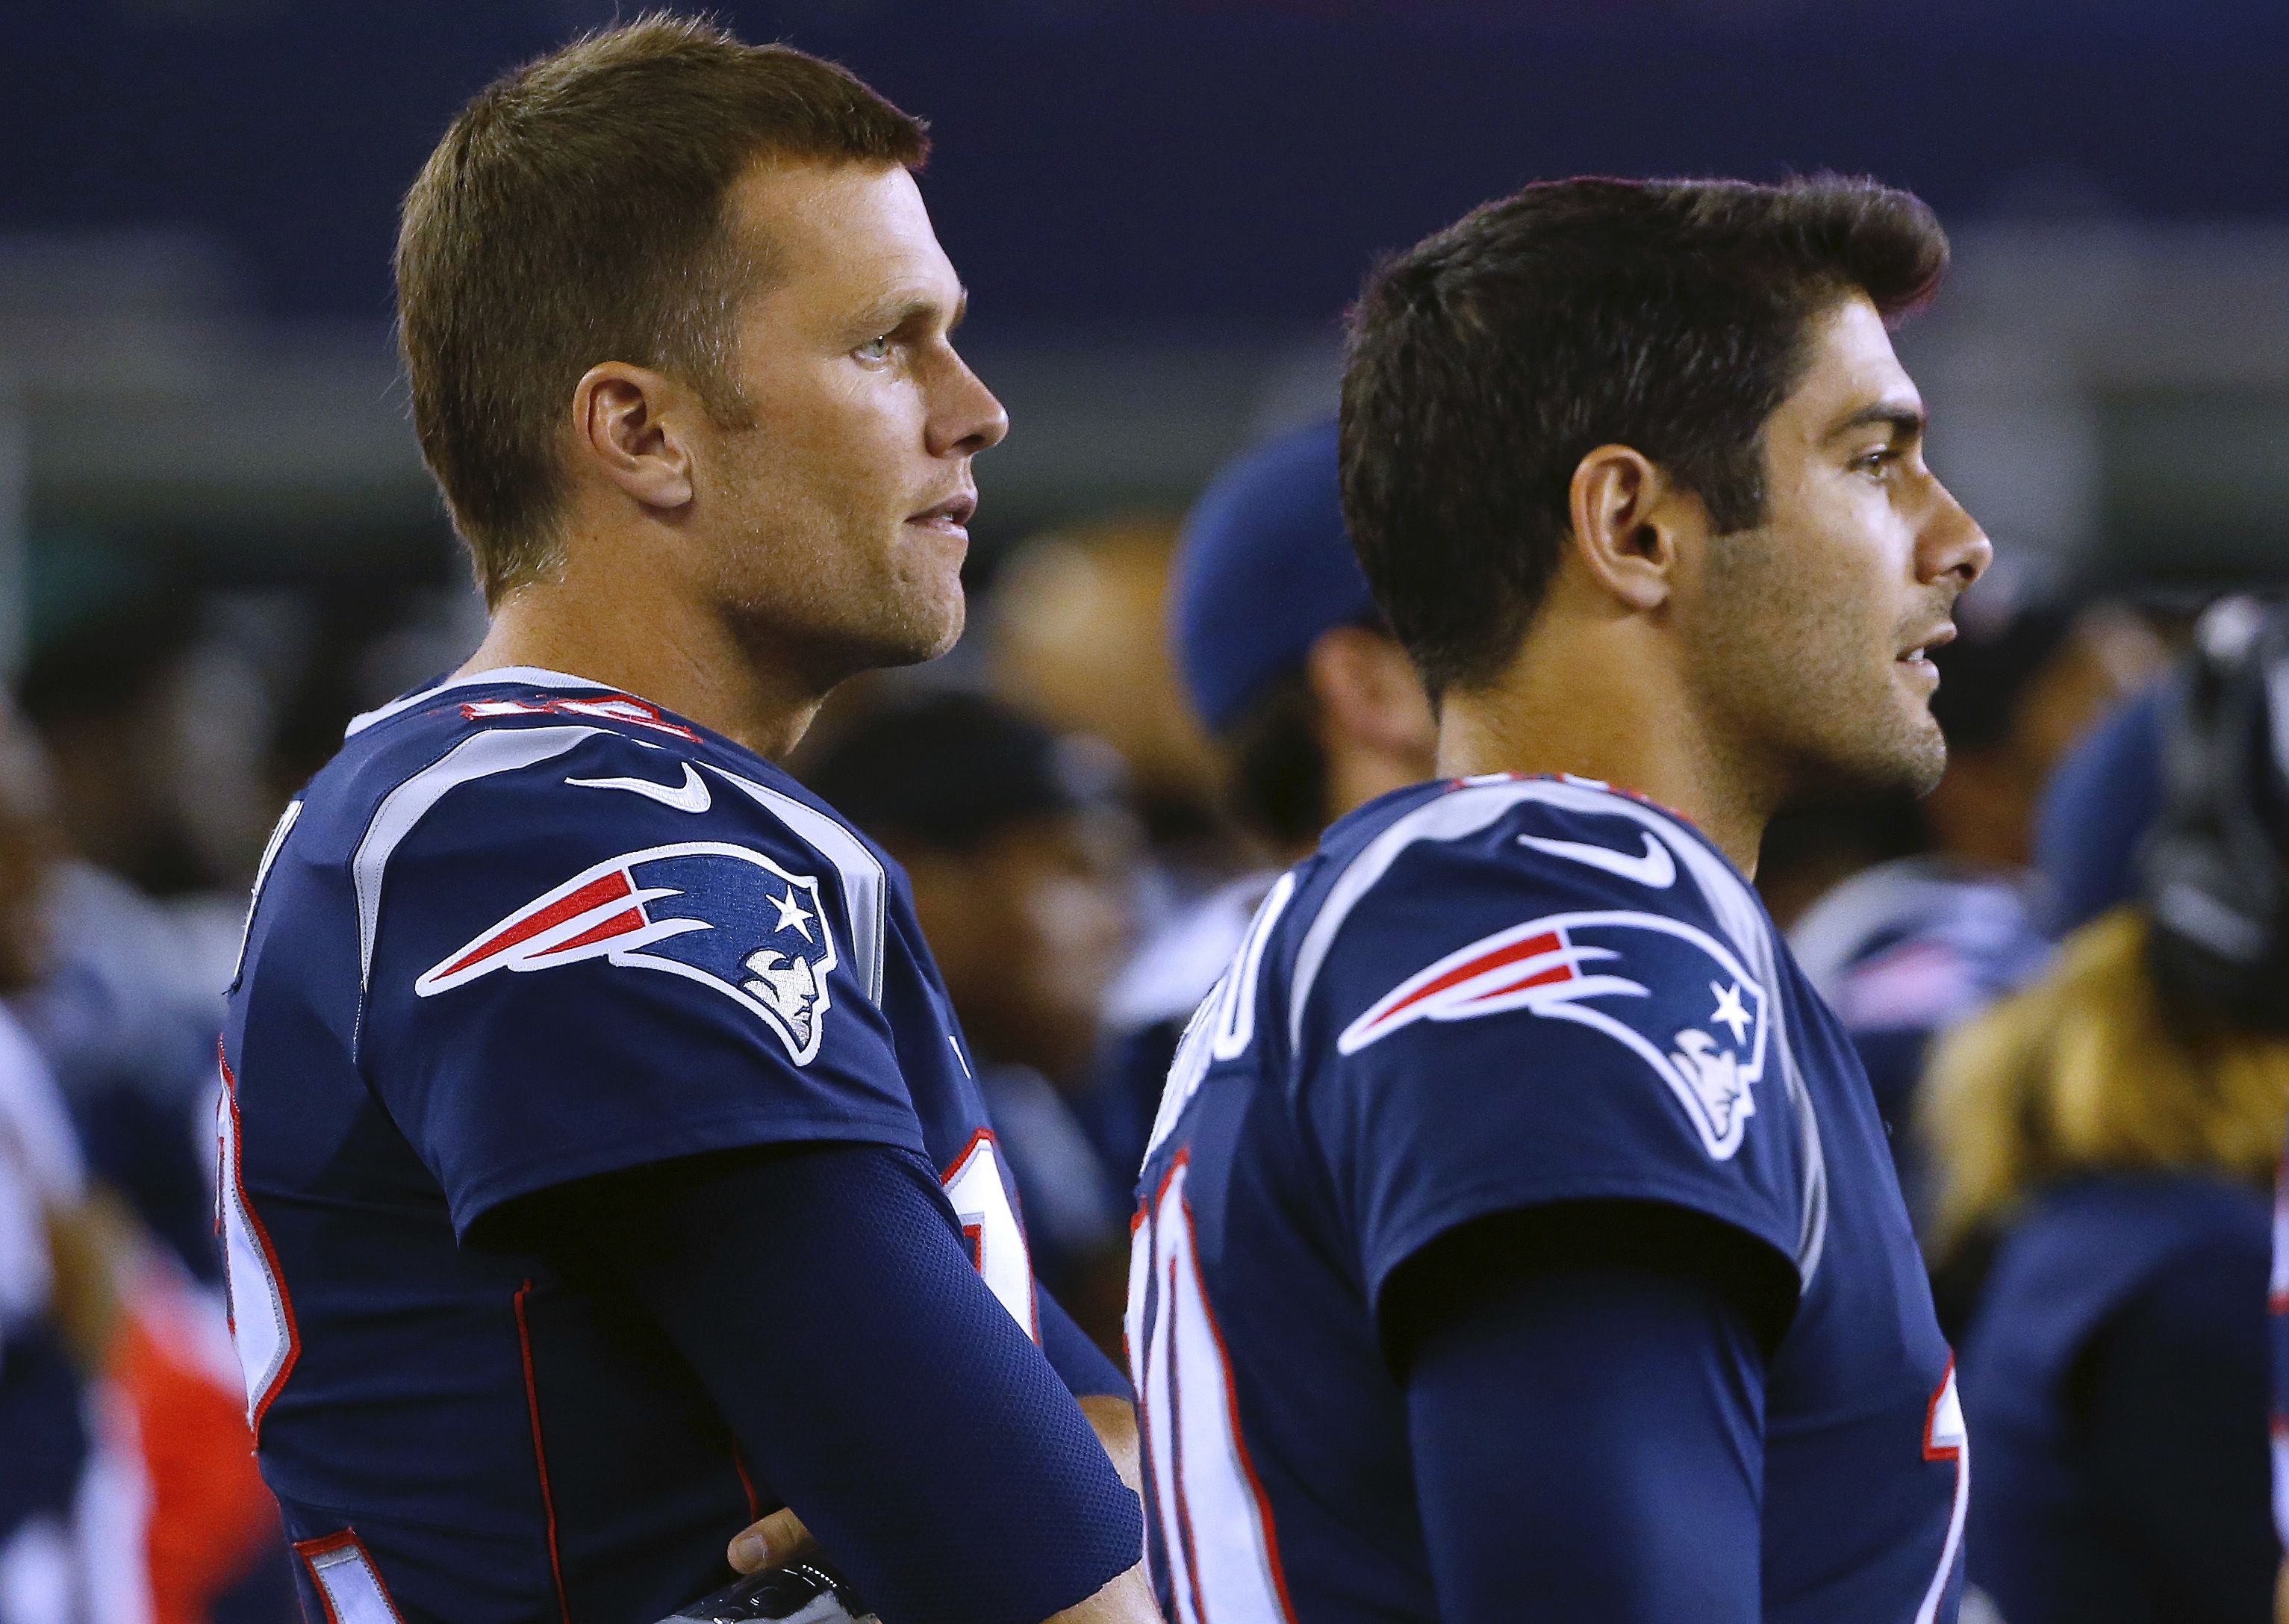 Super Bowl 2020: 49ers' Jimmy Garoppolo shares Patriots' Tom